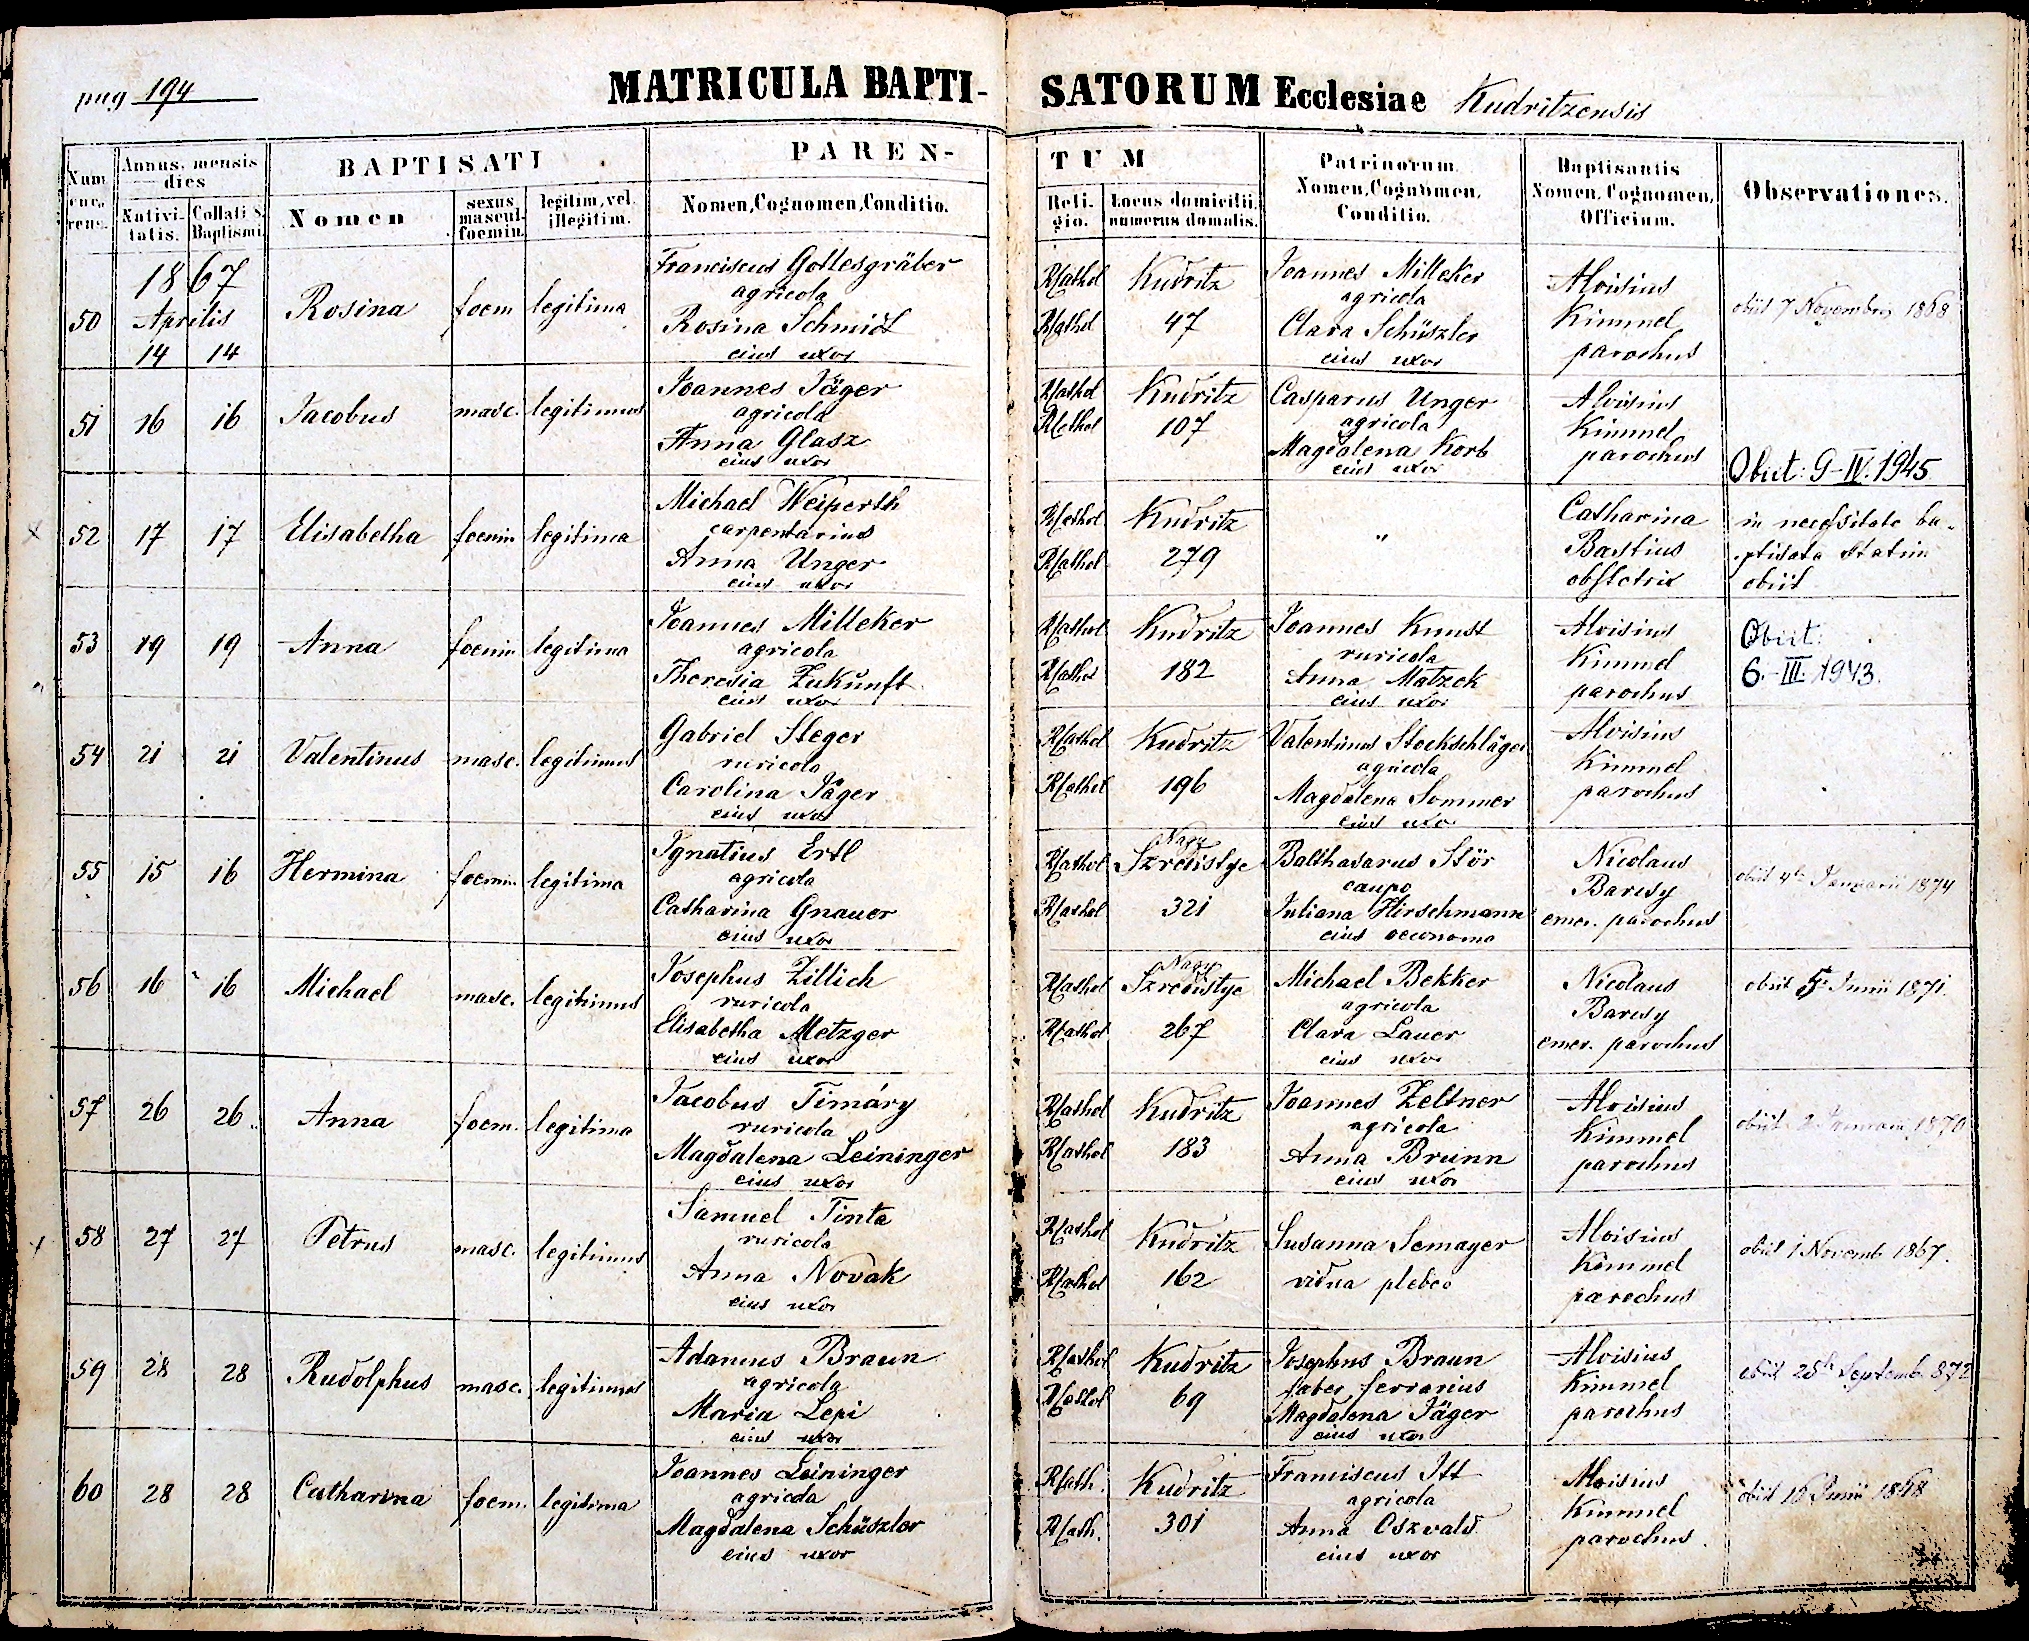 images/church_records/BIRTHS/1852-1870B/194